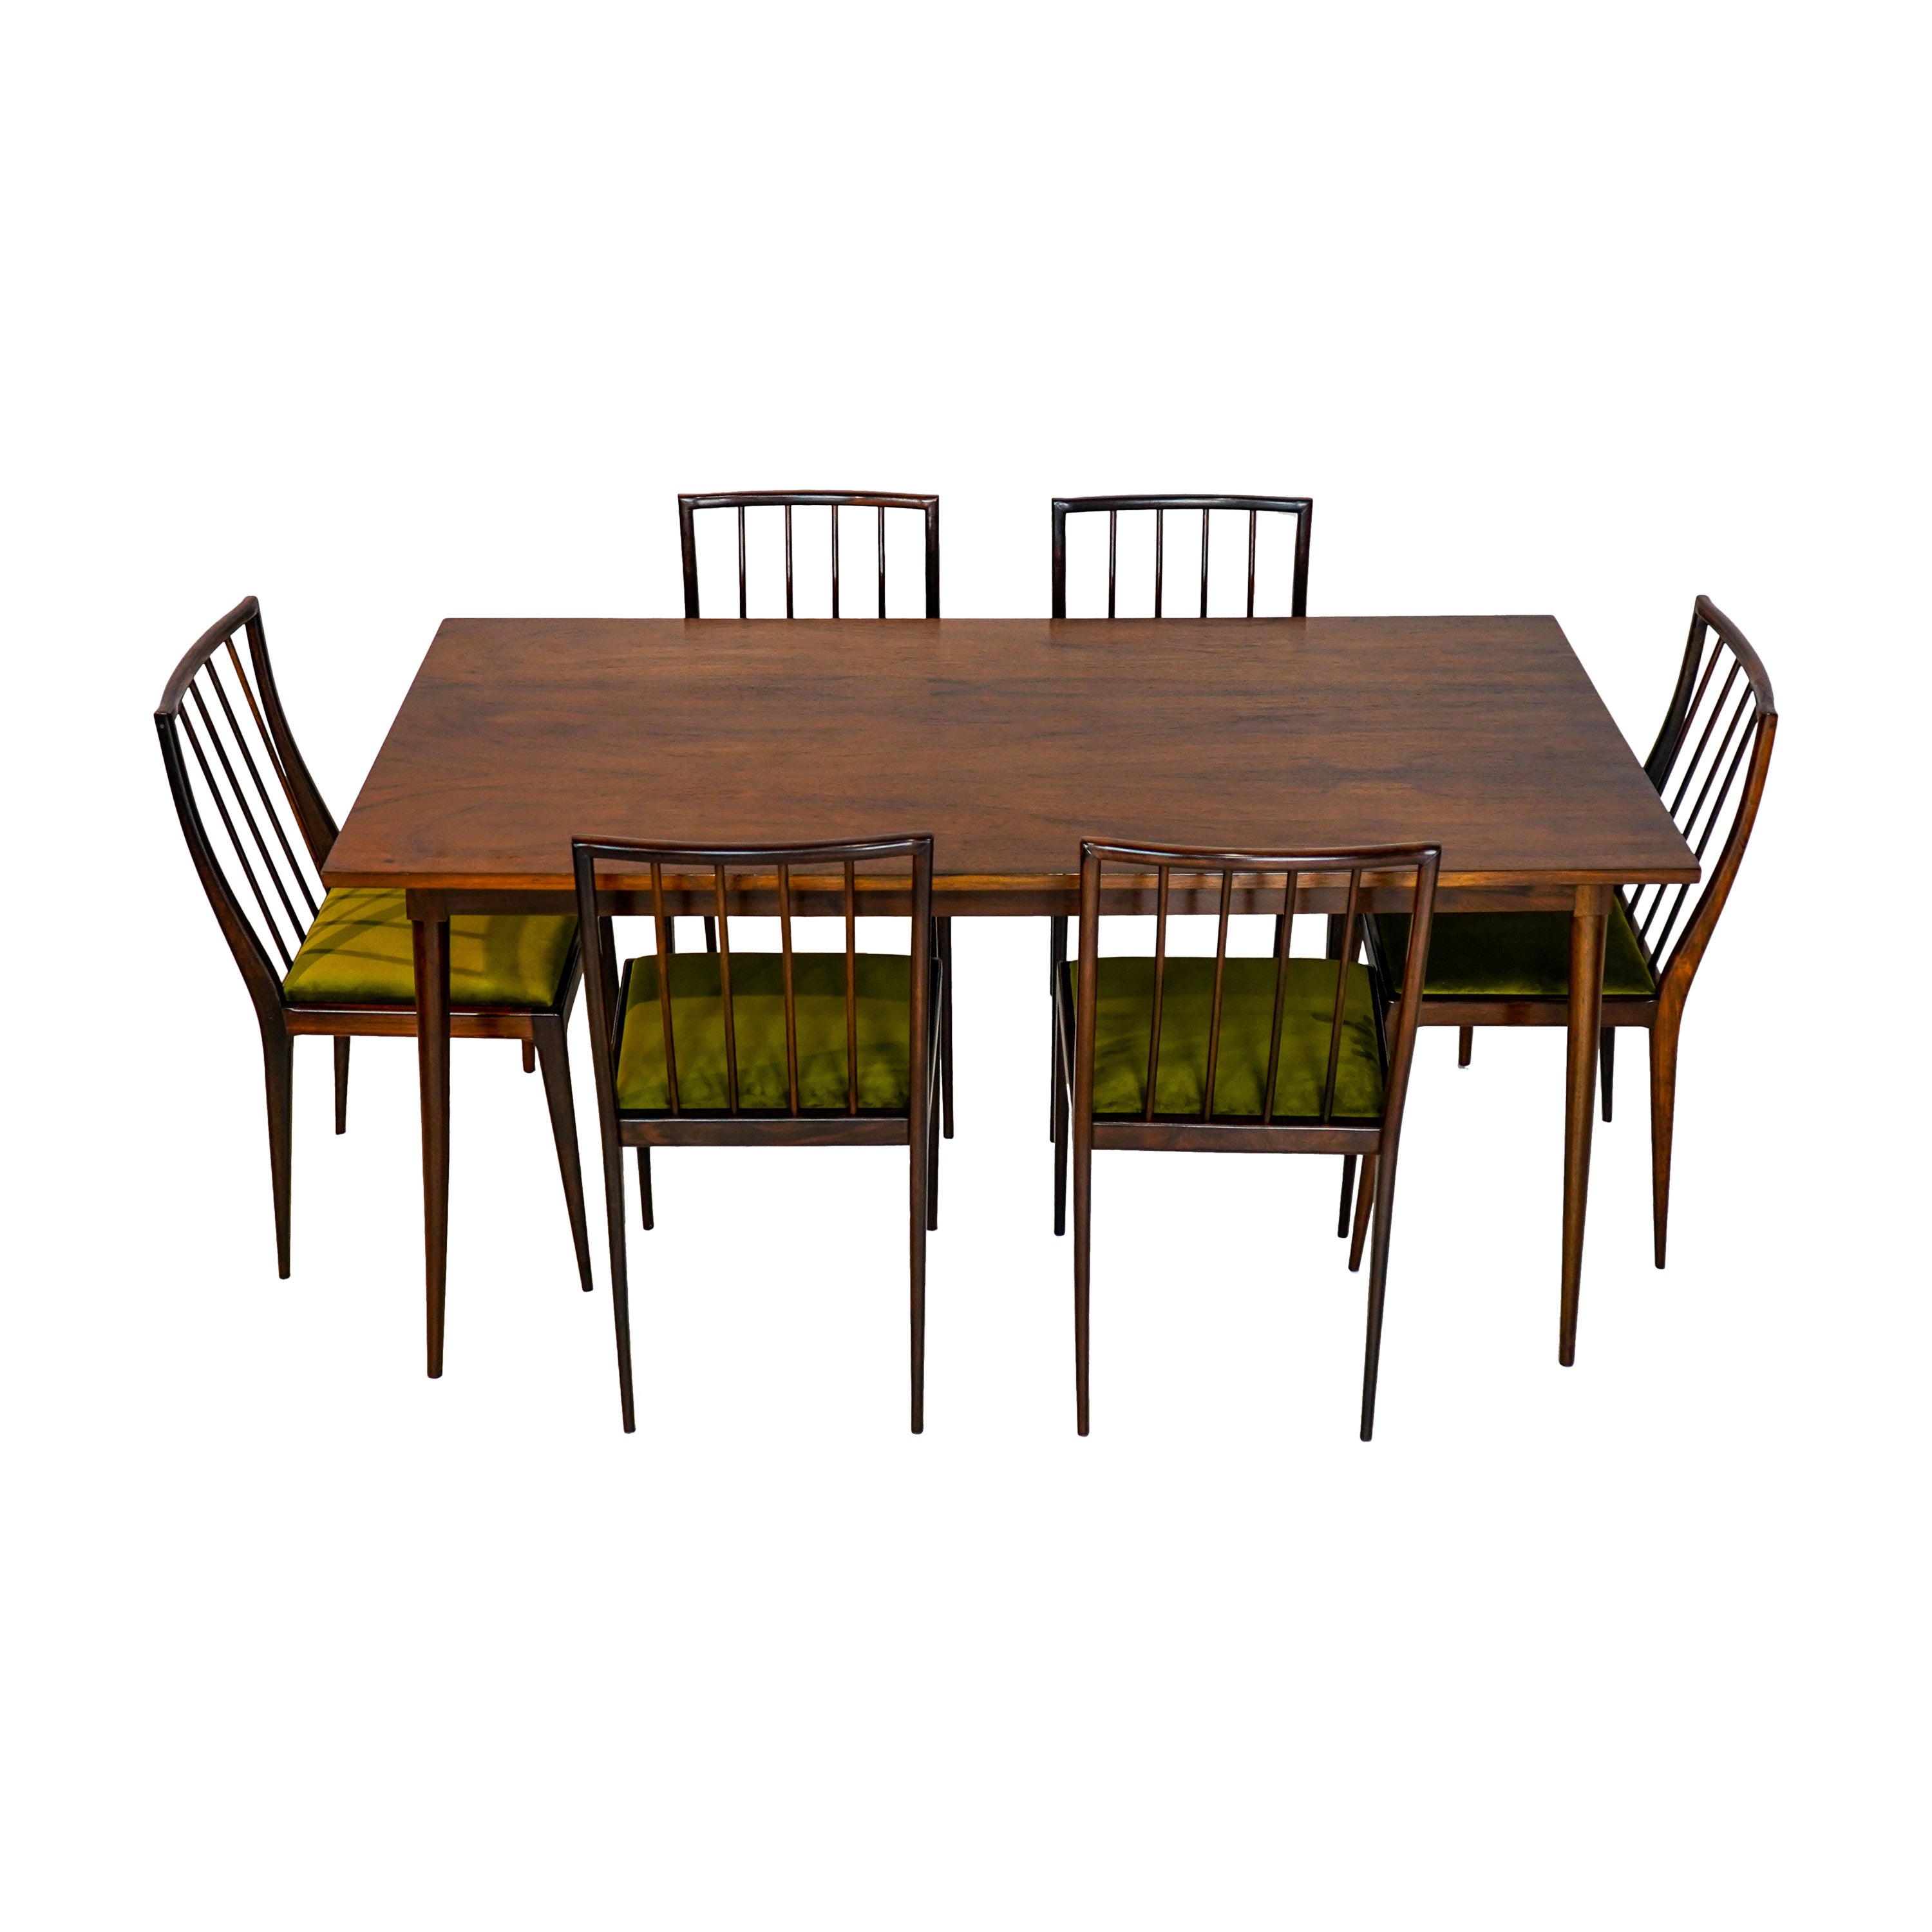 GB01 RIPAS - 6 chaises et table scellée en bois de rose, Geraldo de Barro Unilabor en vente